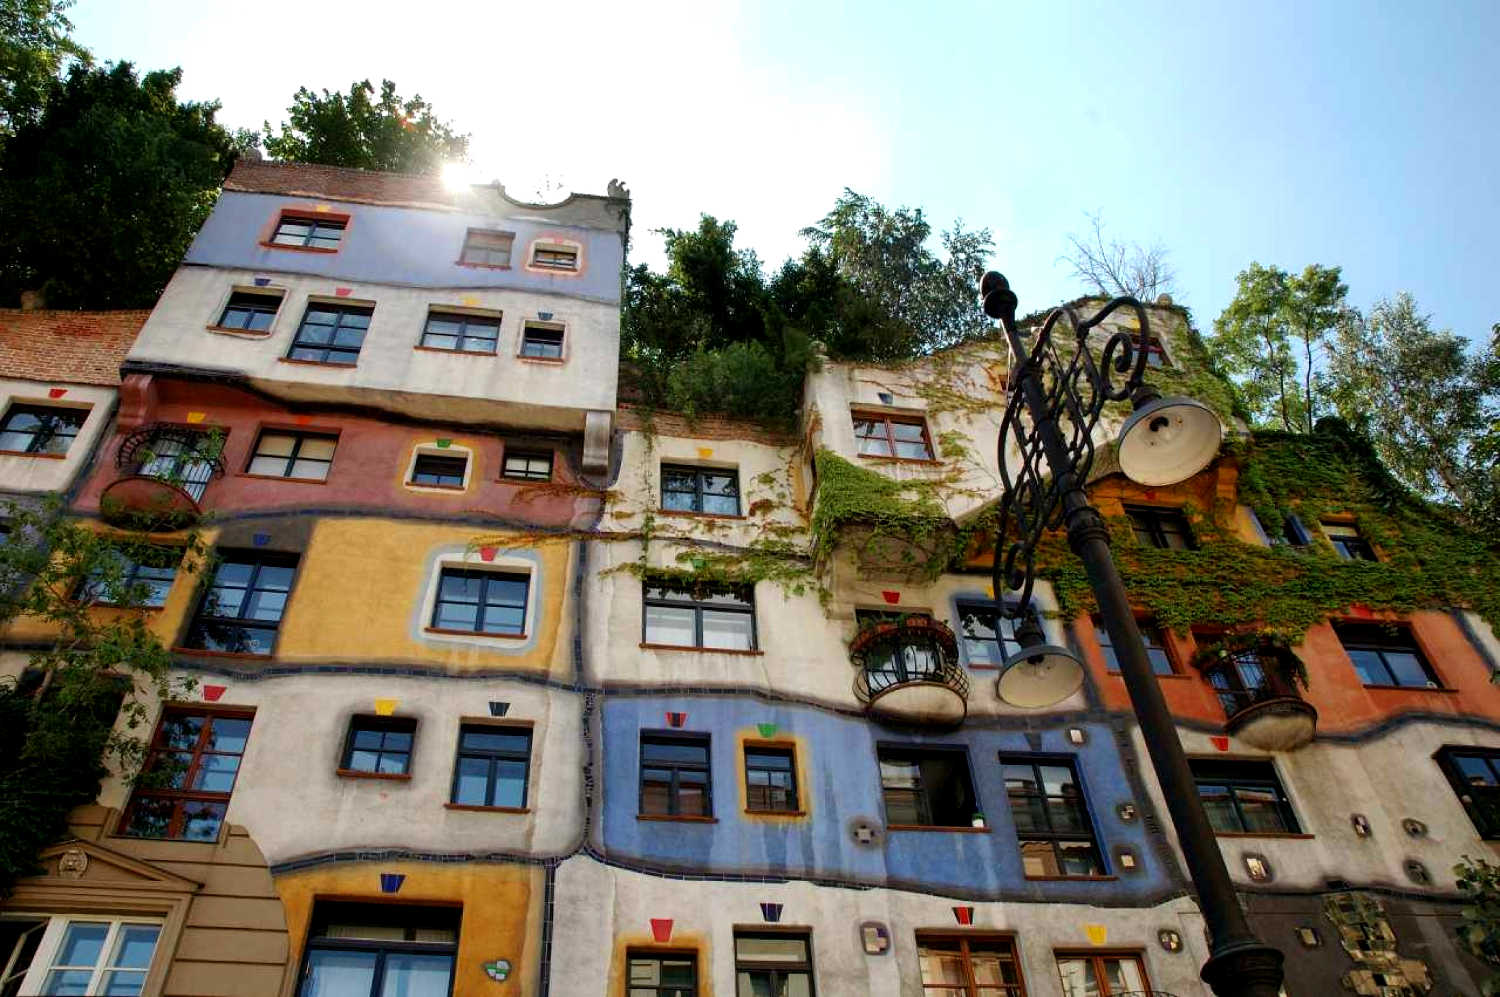 Hundertwasserhaus in Vienna @Hundertwasser